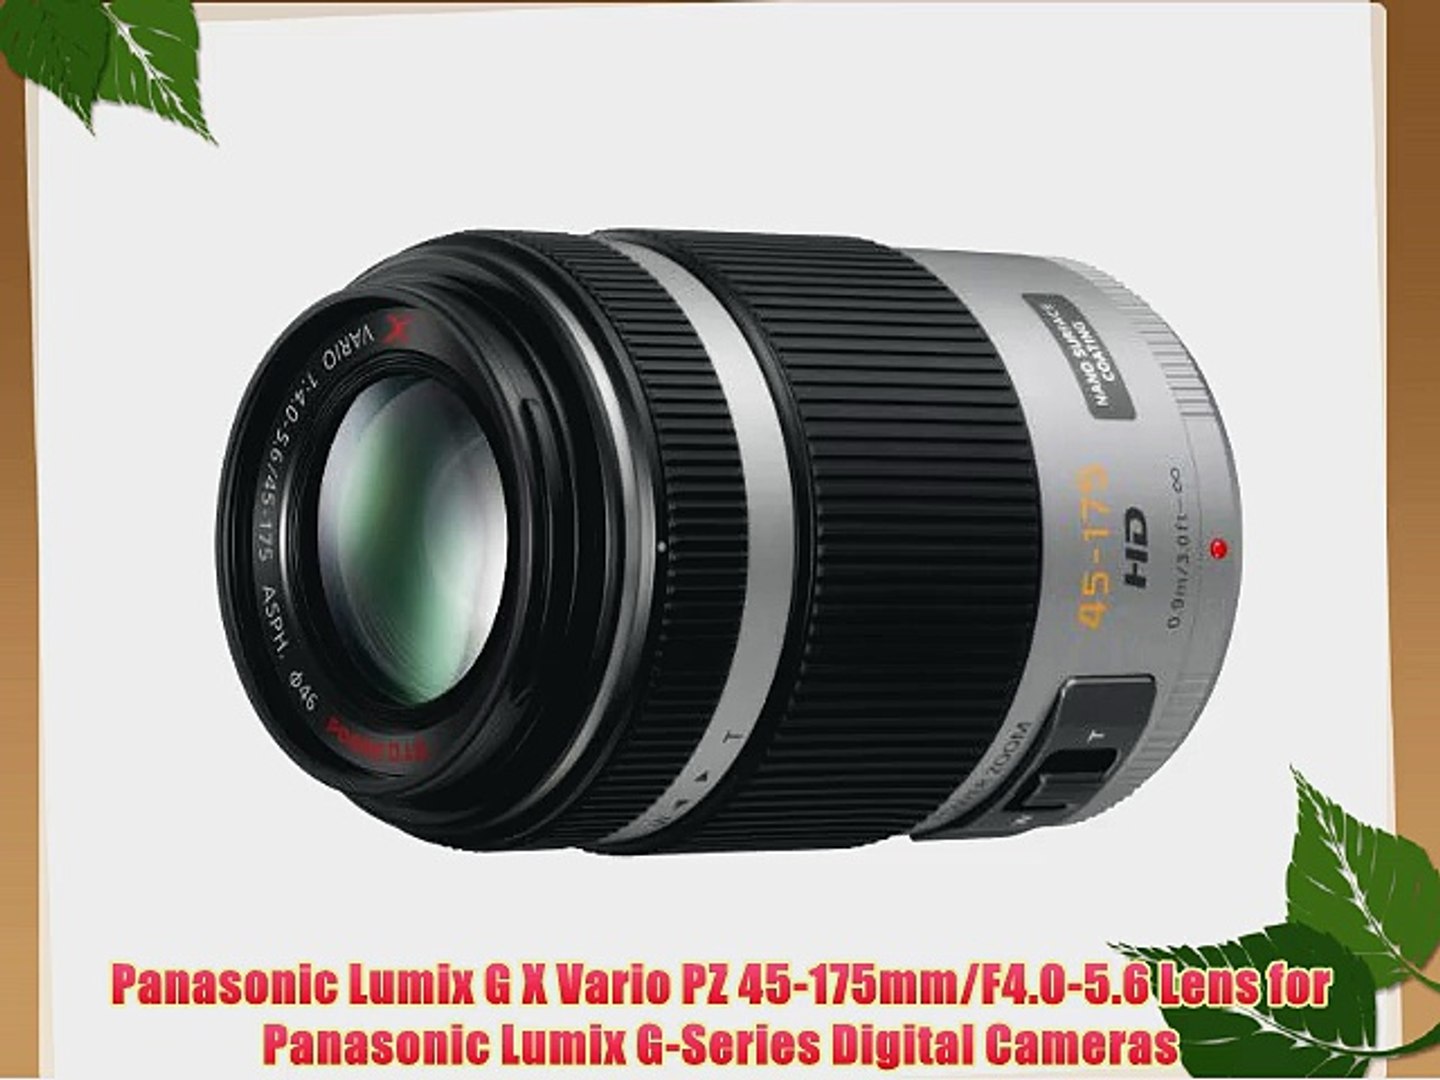 Panasonic Lumix G X Vario Pz 45 175mm F4 0 5 6 Lens For Panasonic Lumix G Series Digital Cameras Video Dailymotion